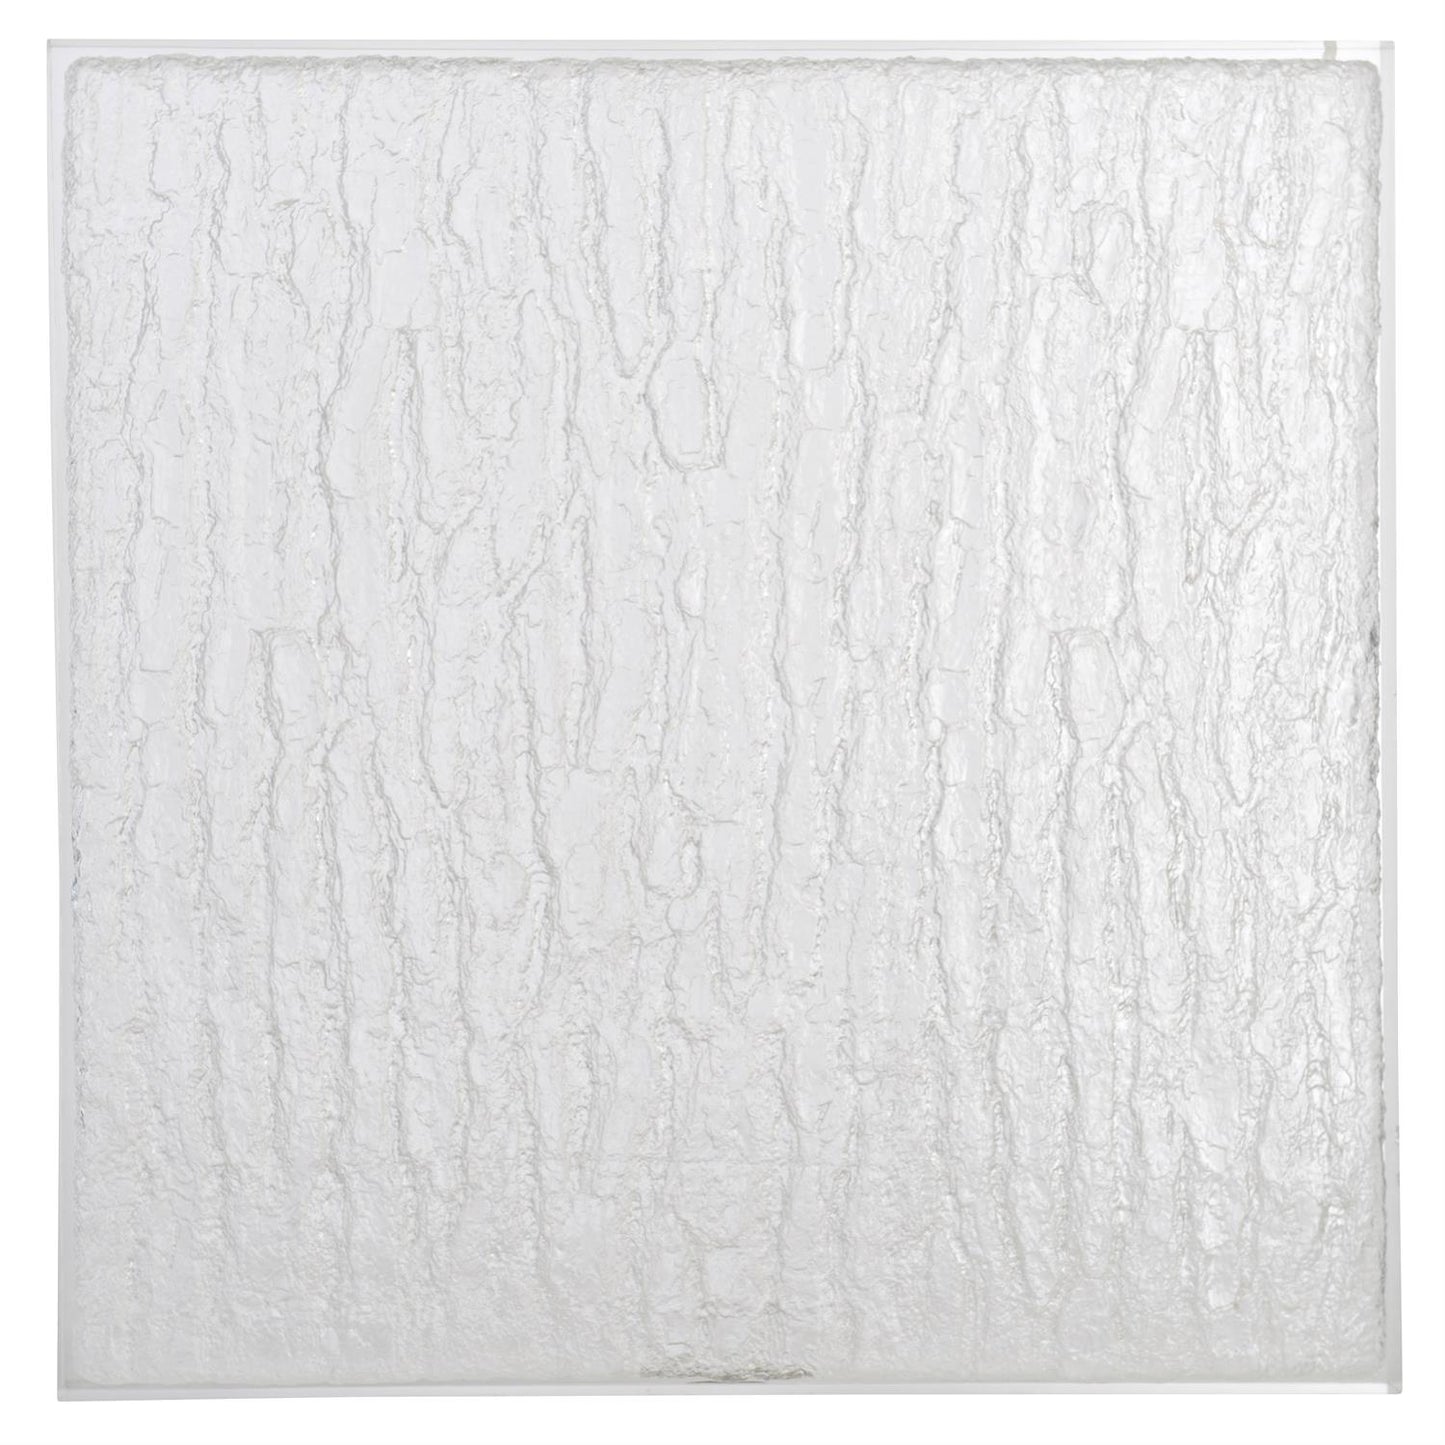 Acrylic like ice, 55"rectangle or 48"square